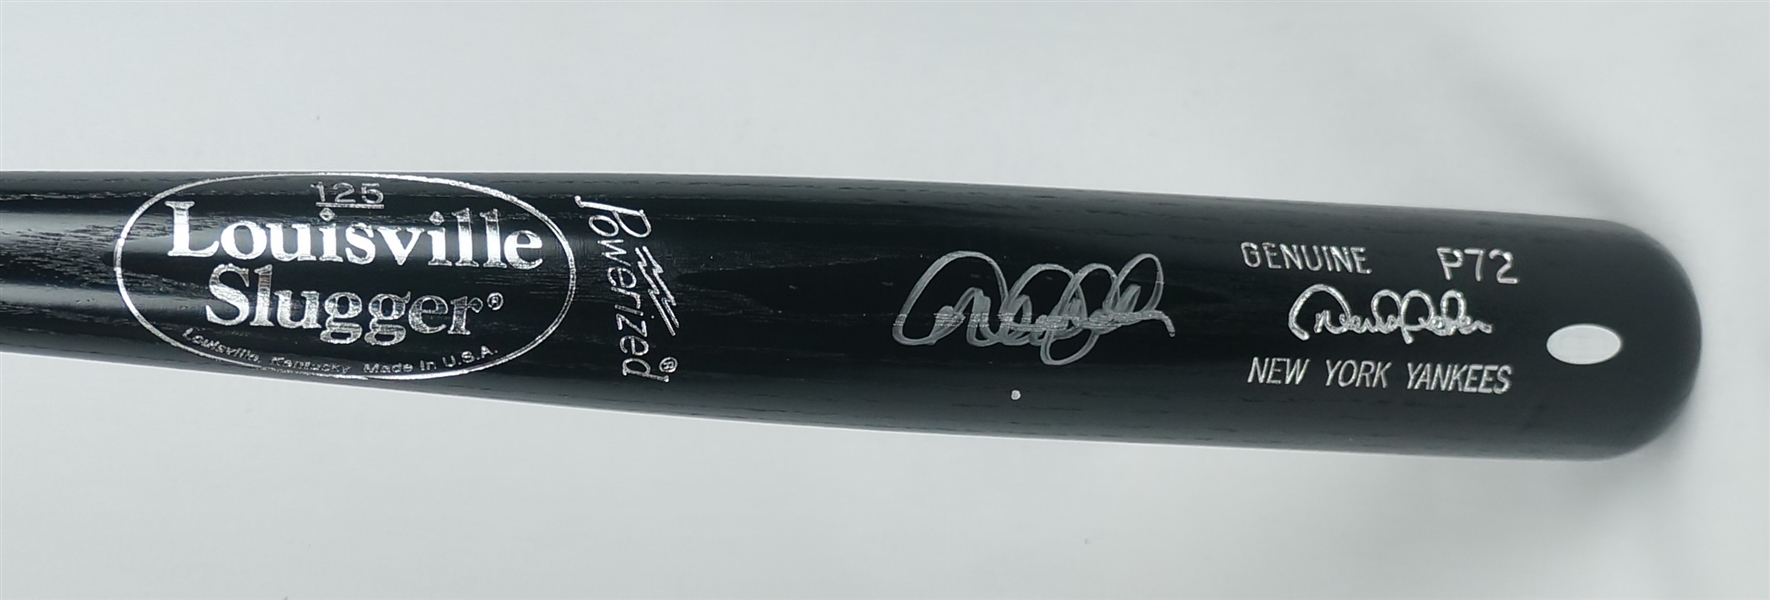 Derek Jeter Autographed Signature Model Louisville Slugger Bat